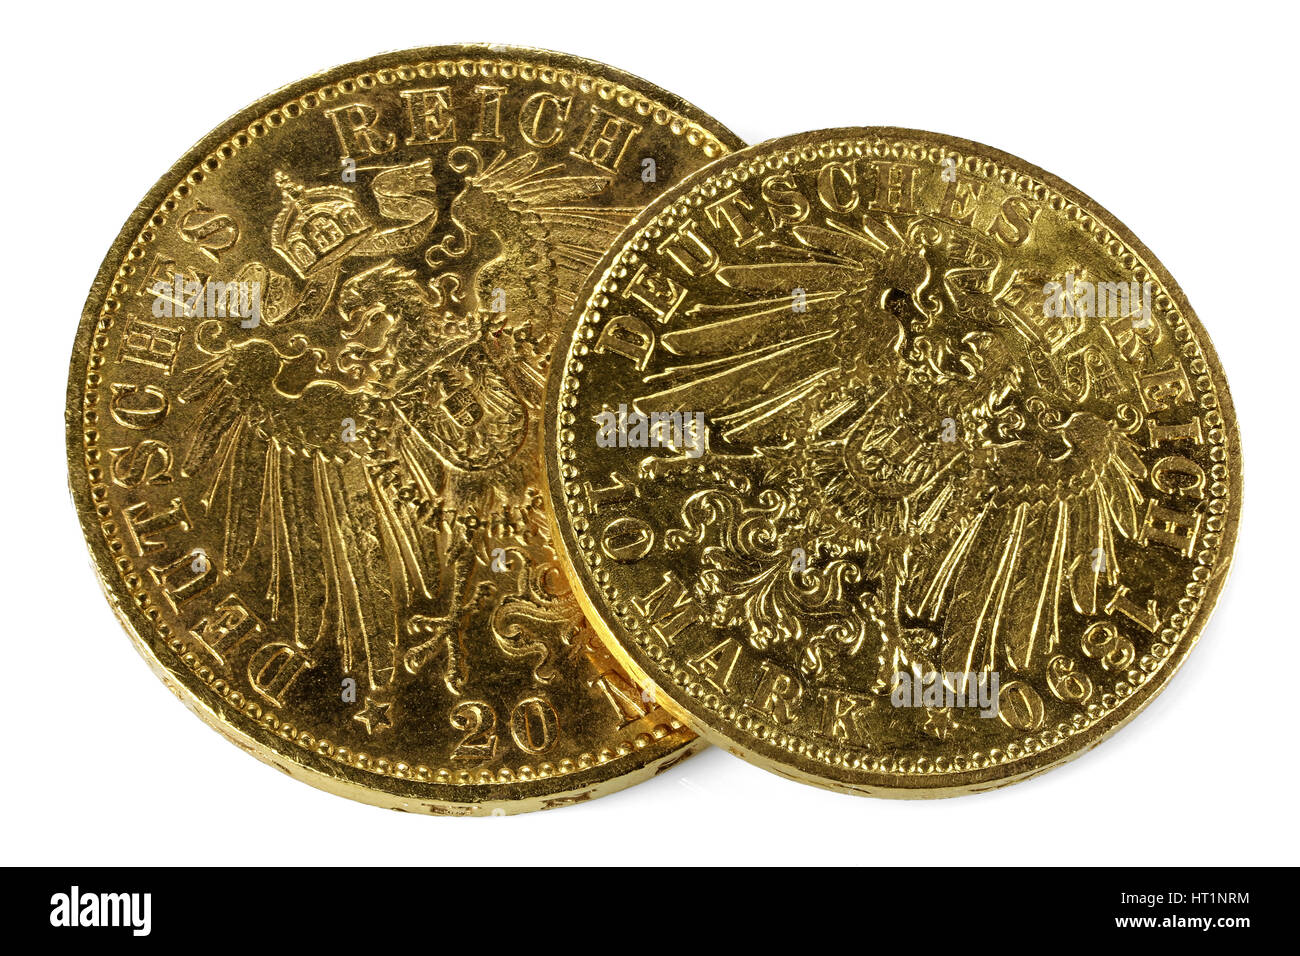 Hamburg gold coins (German Empire Goldmark) isolated on white background Stock Photo